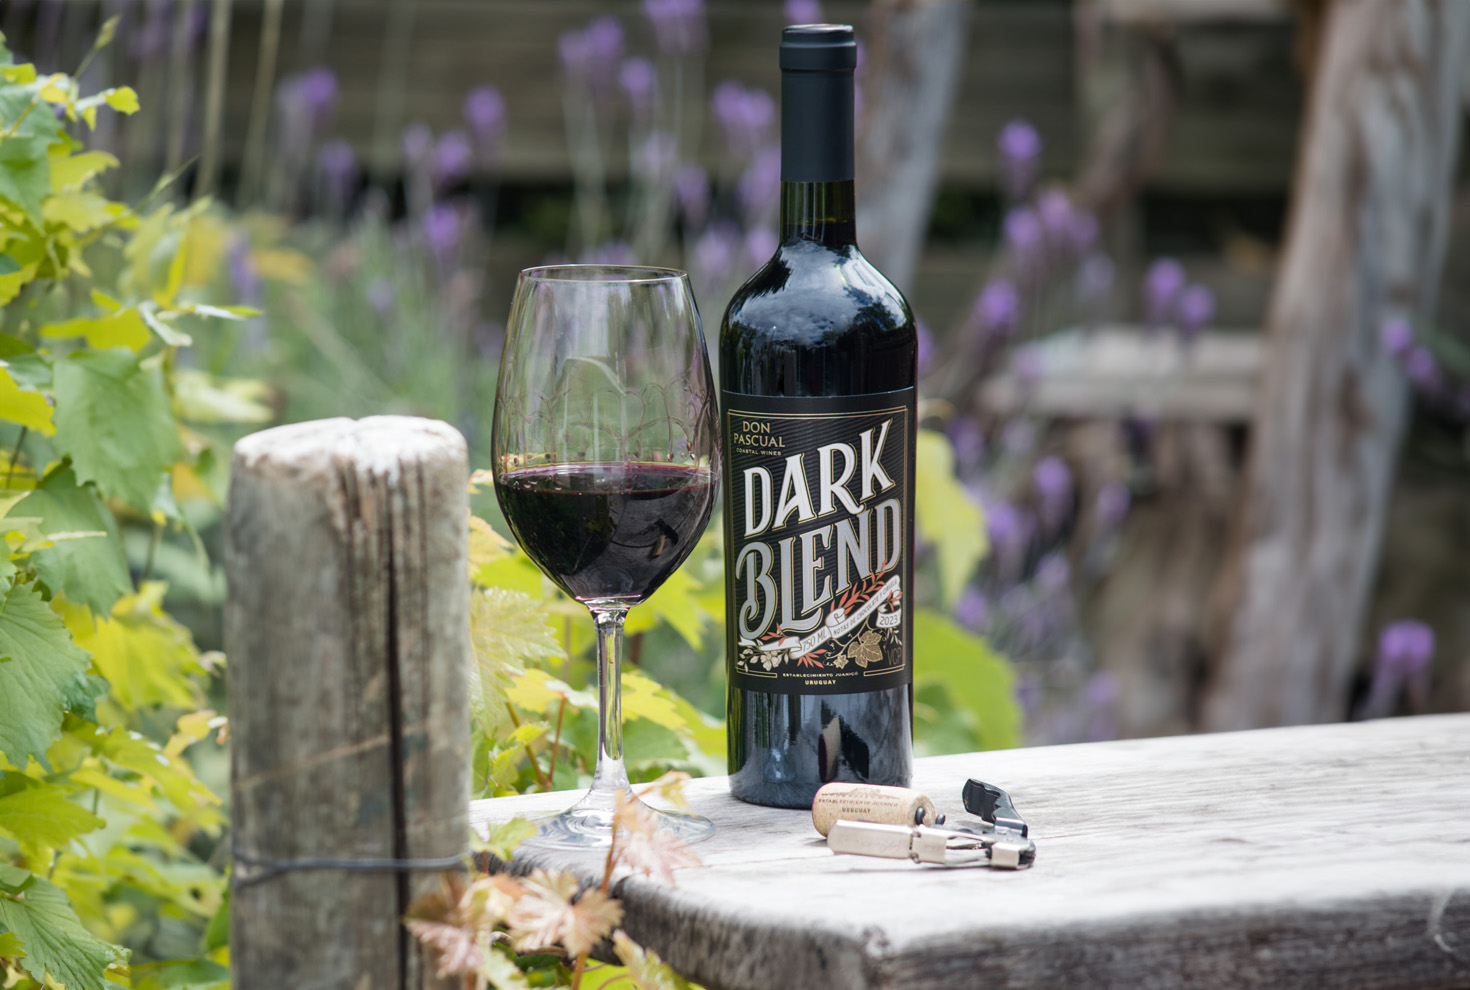 Dark Blend seleccionado por INAVI para representar la vitivinicultura uruguaya